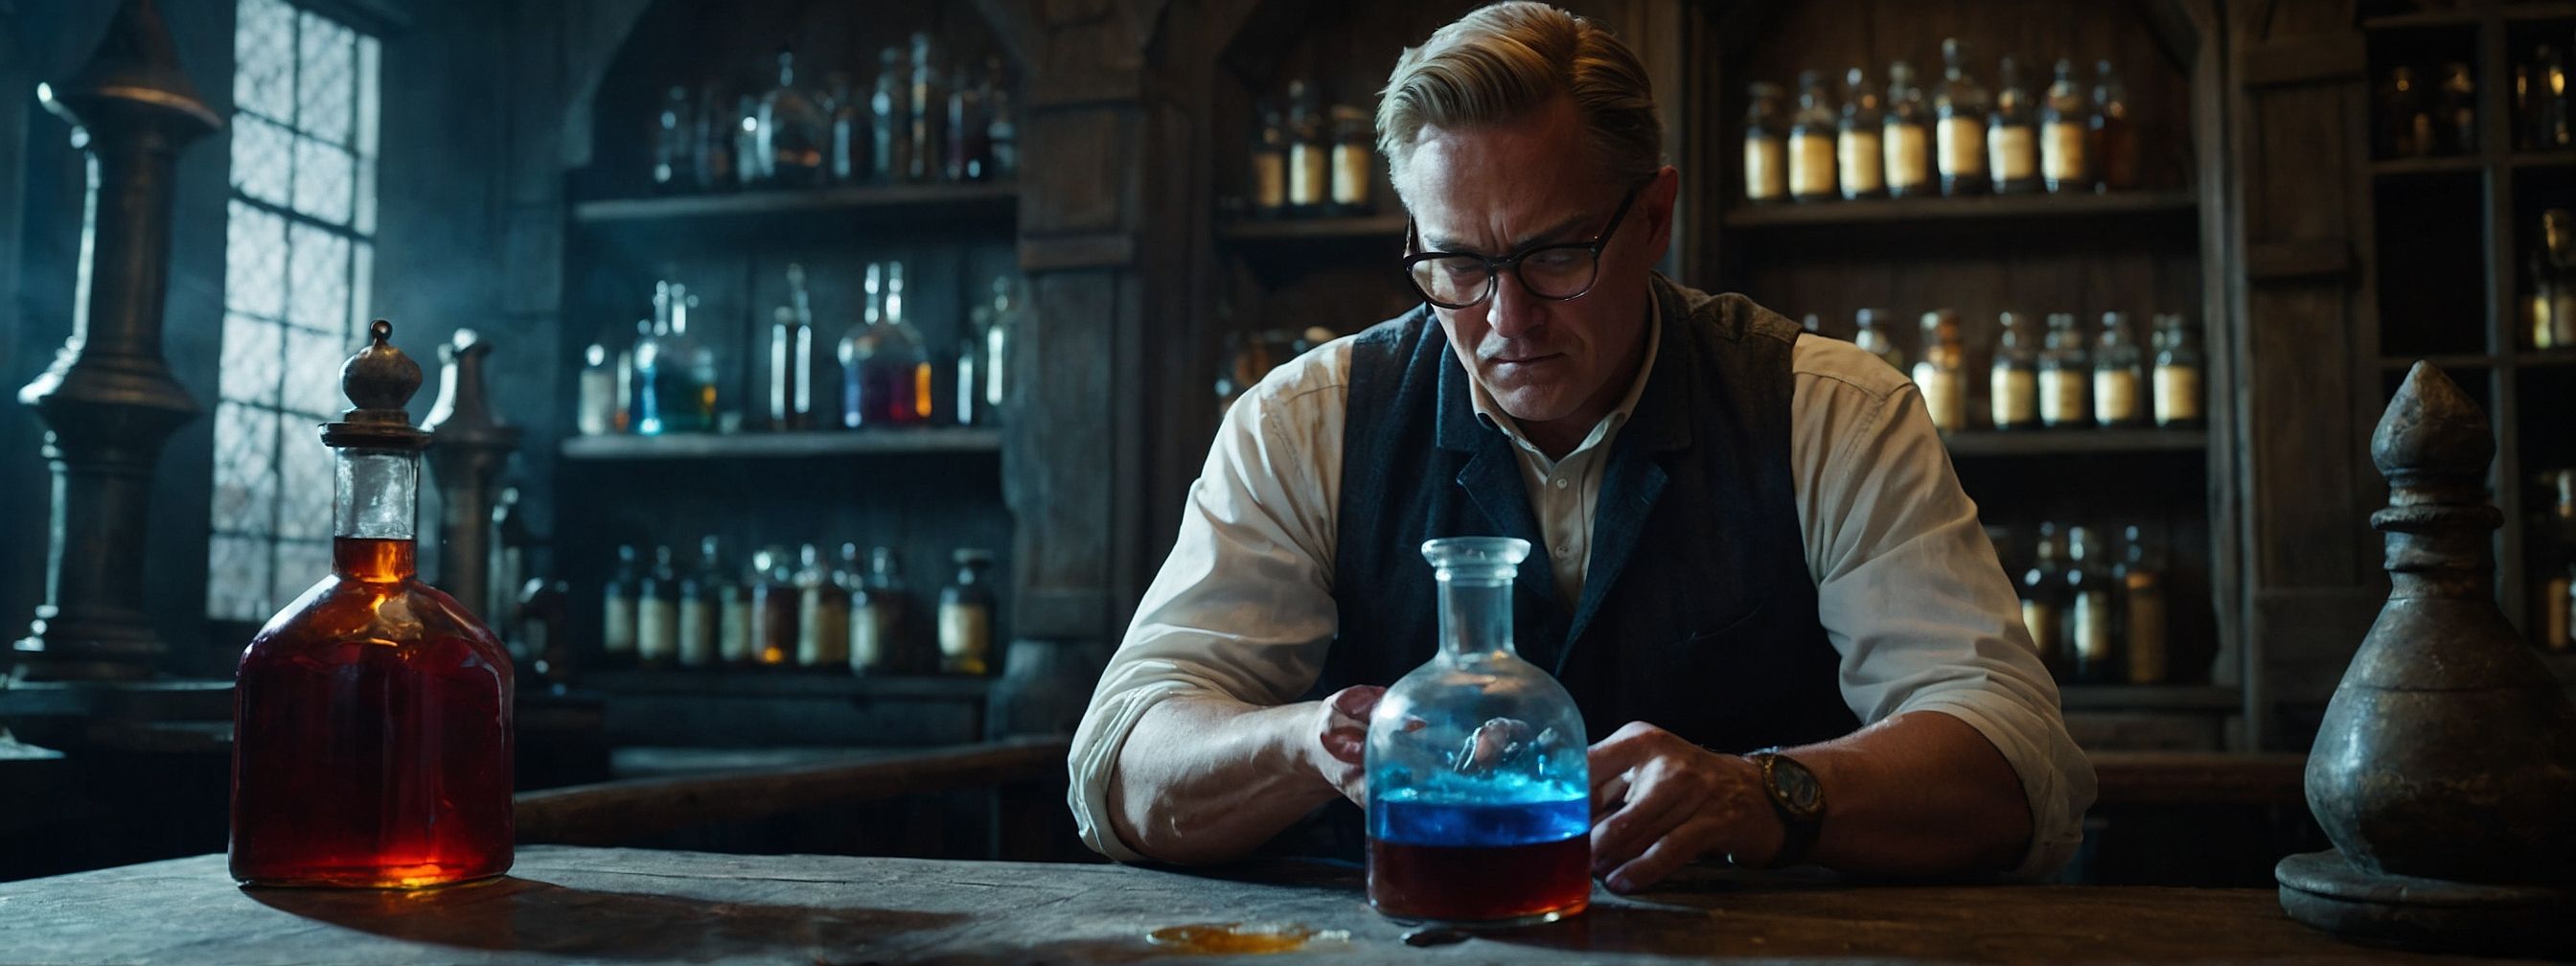 alchemist creating potions